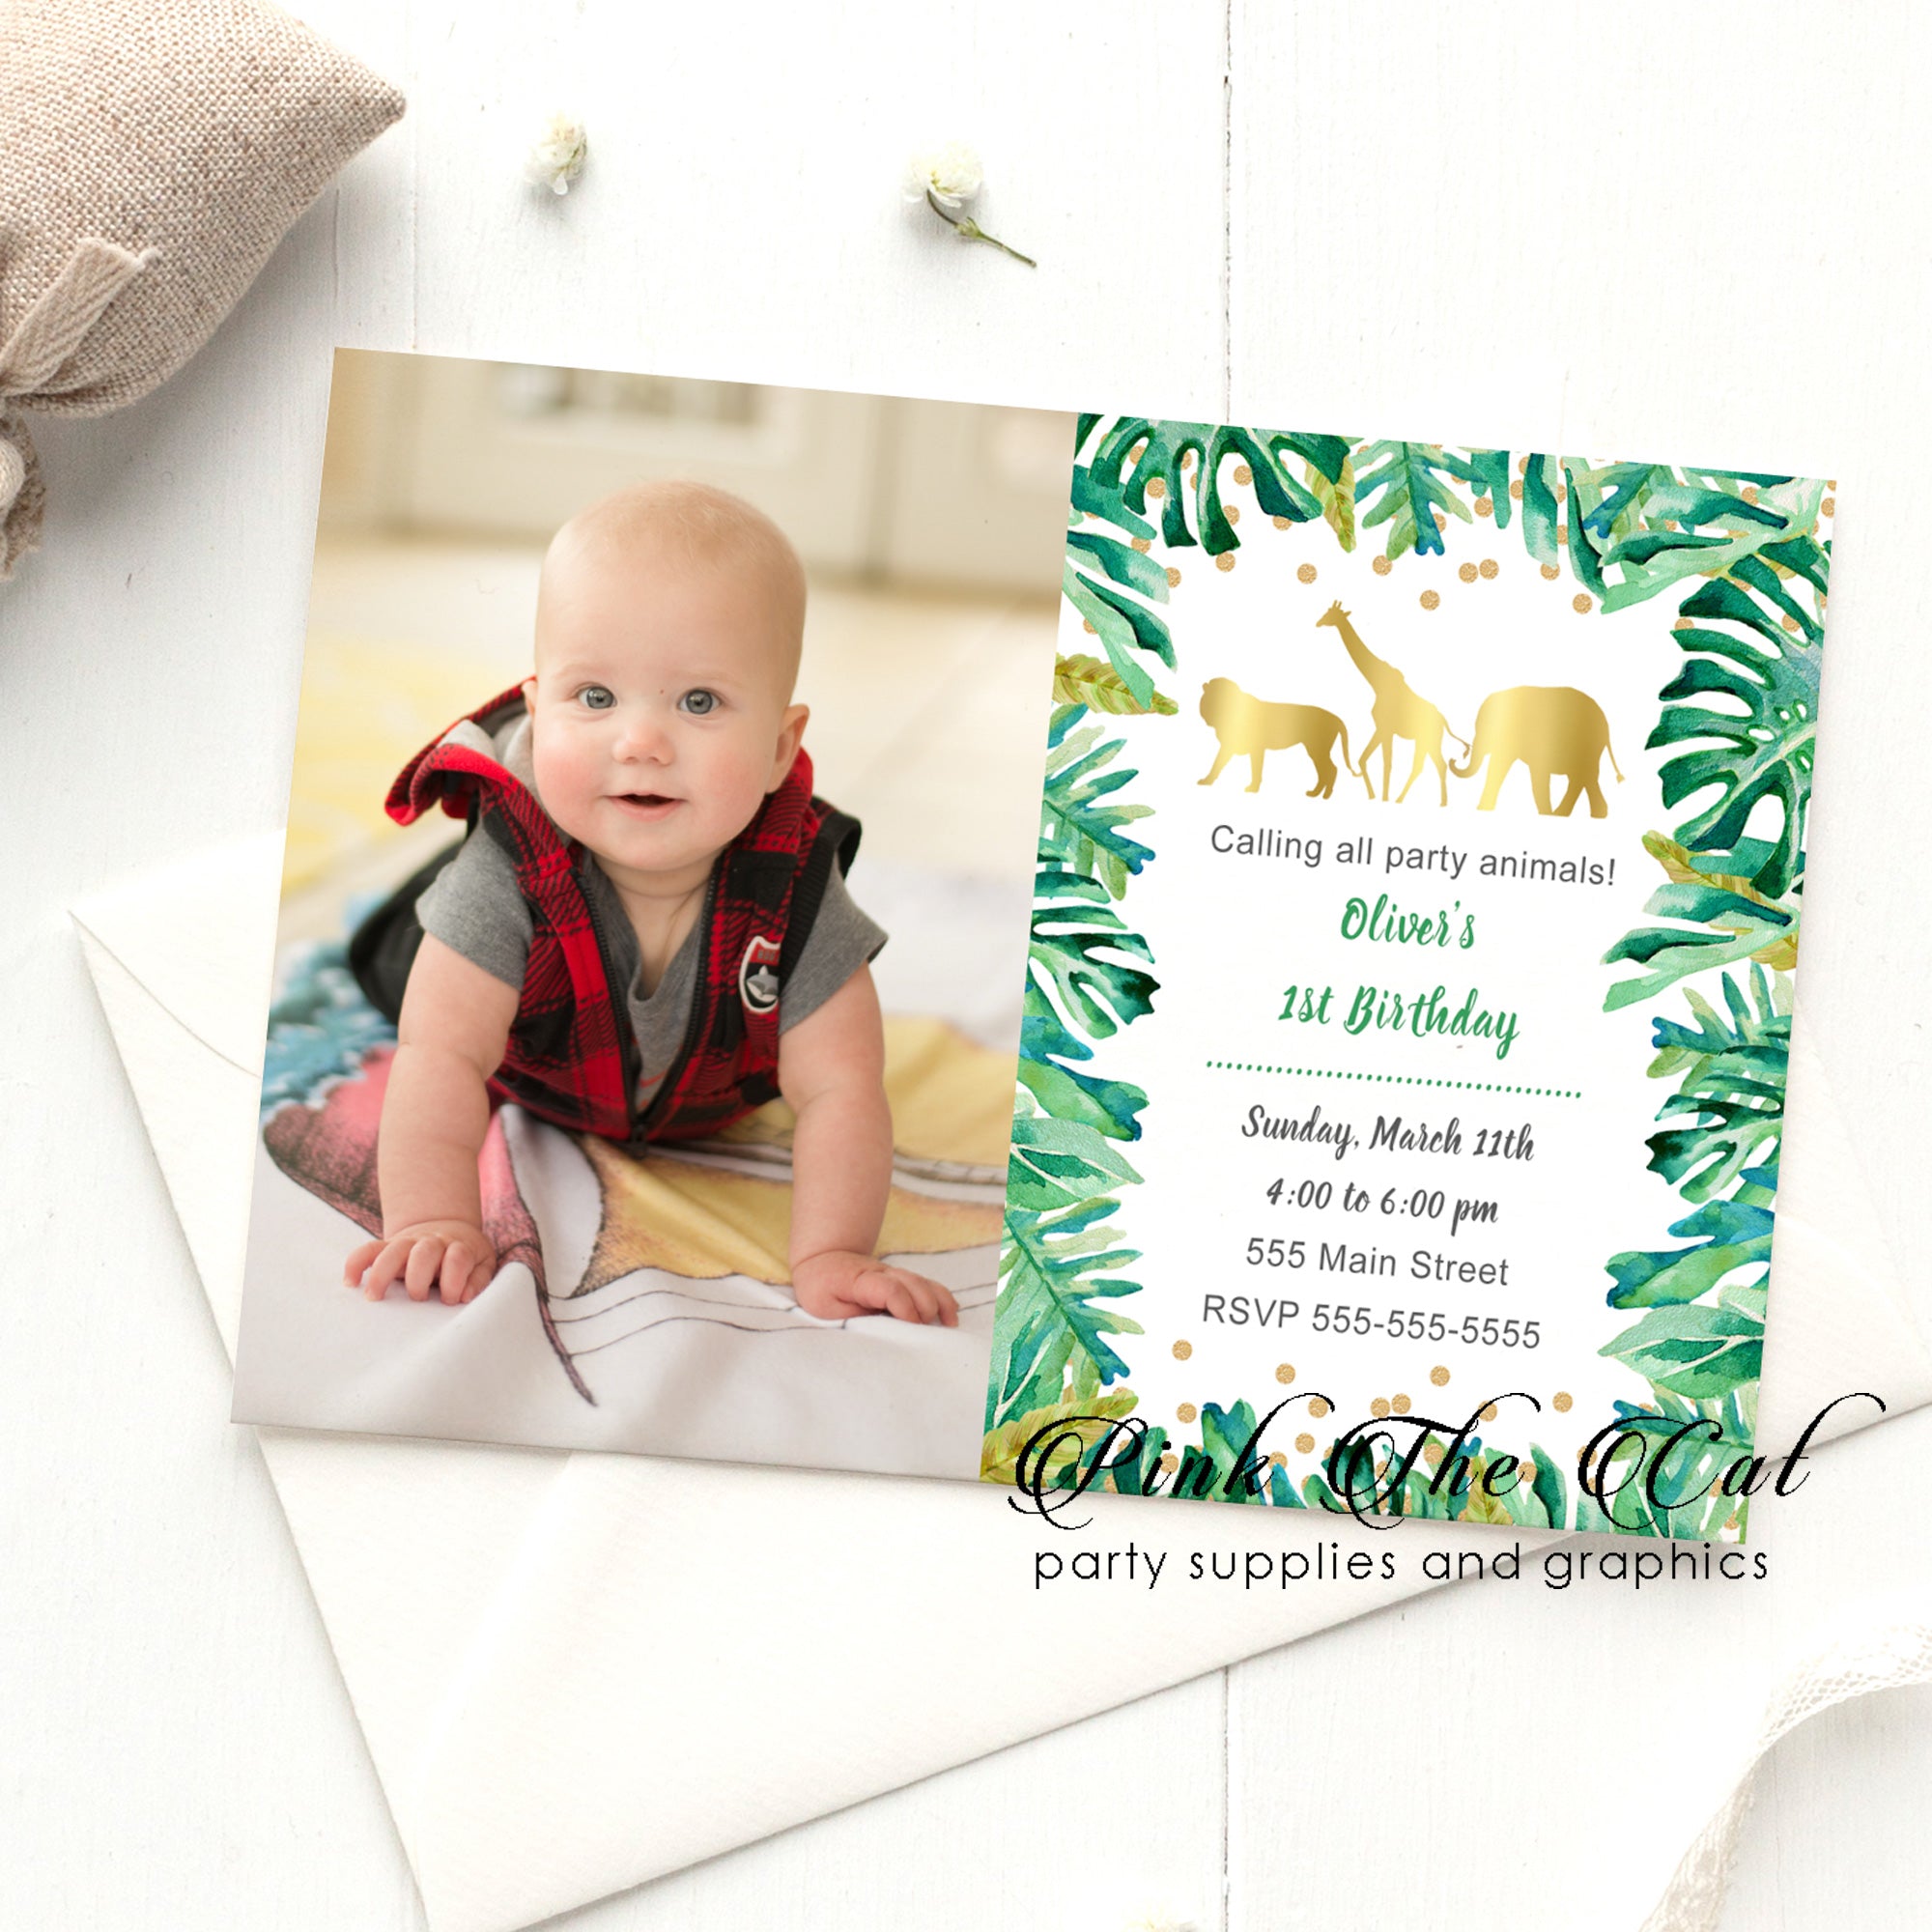 Jungle invitations boy birthday party with photo printable